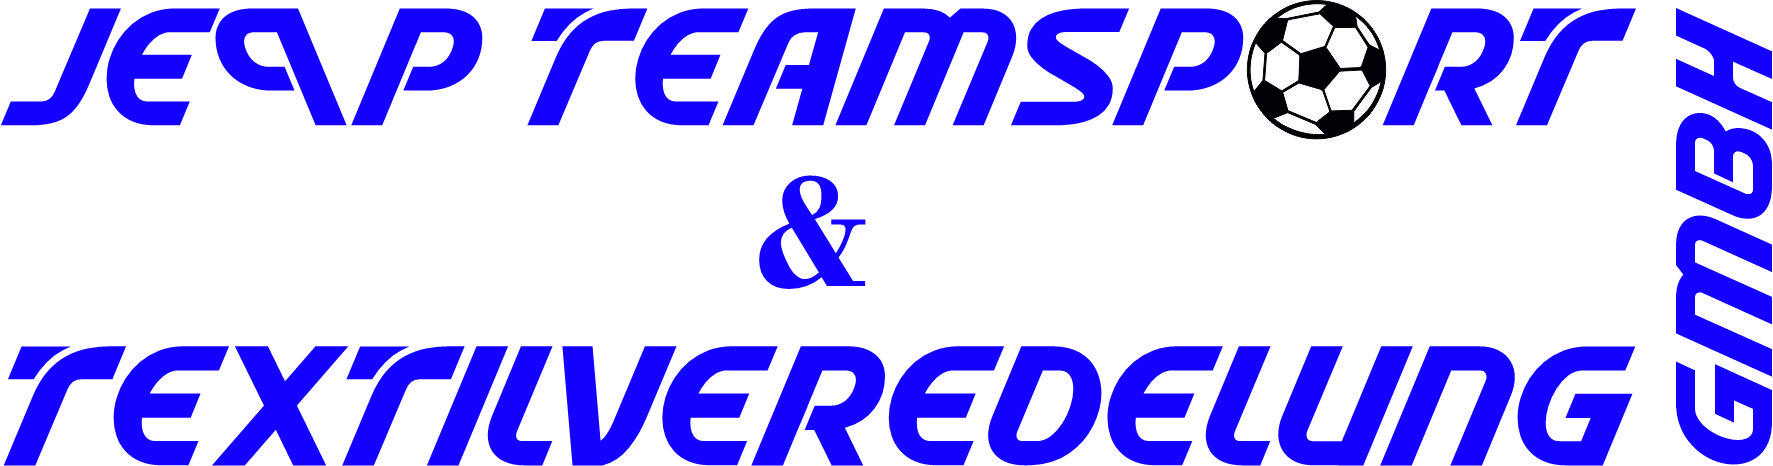 Weißenseer Fußball Club e. V. Logo2